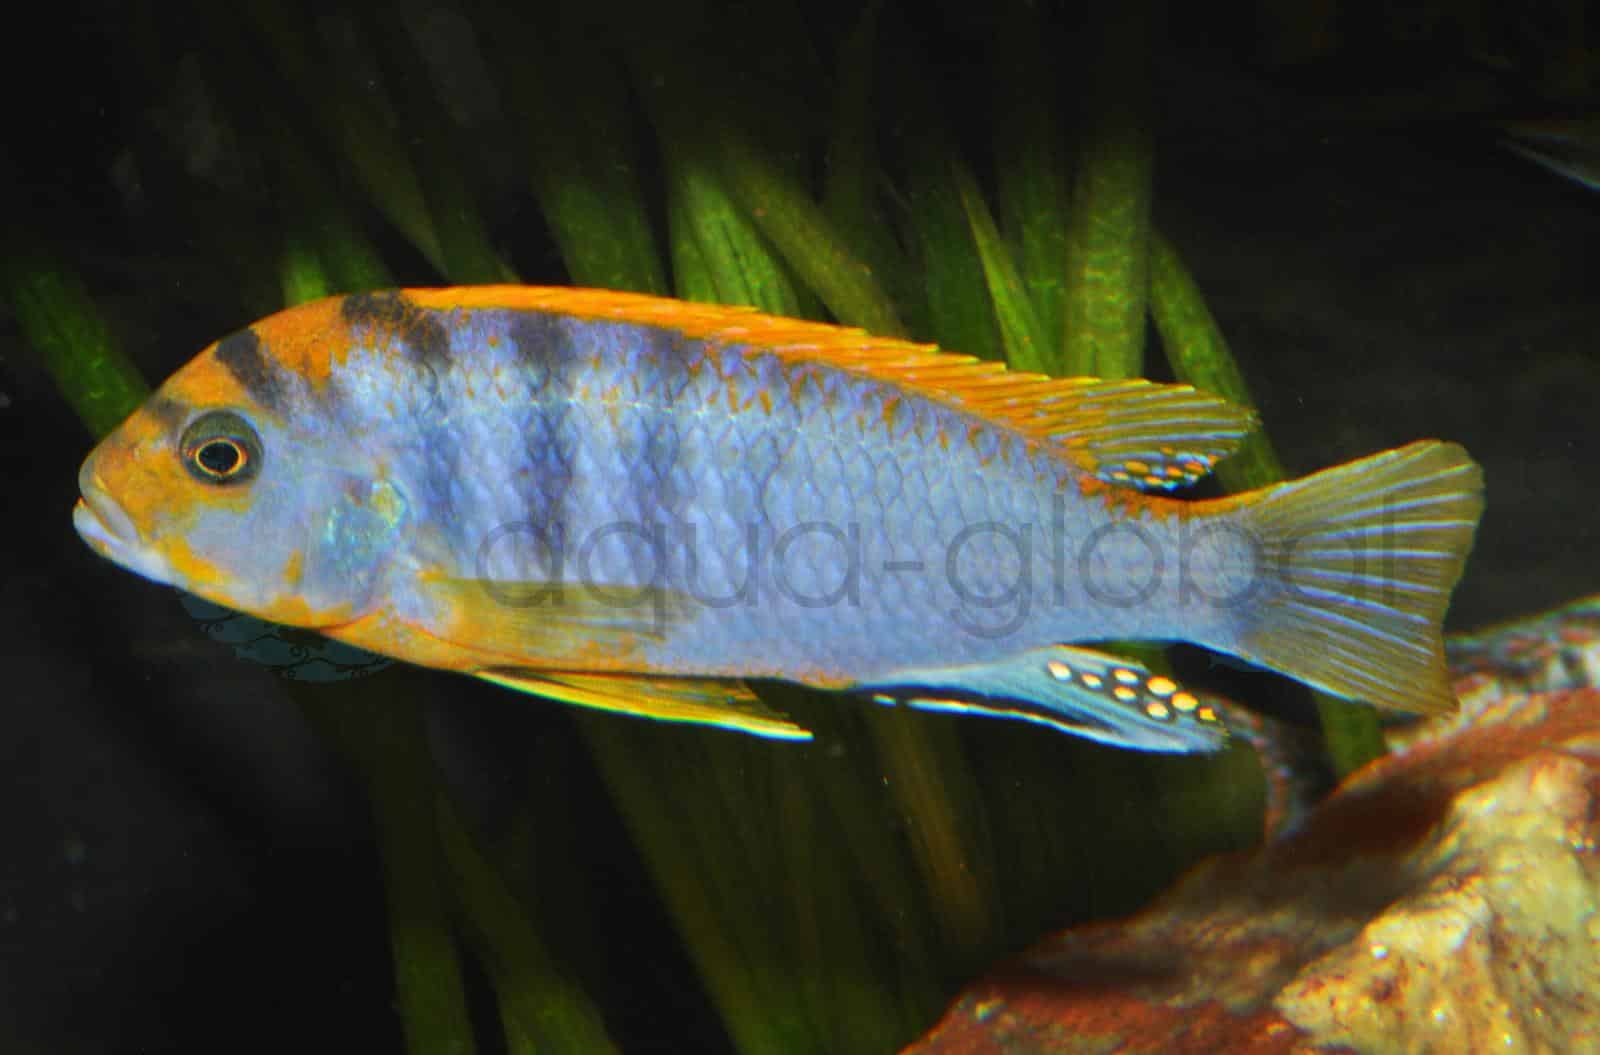 Blauer Labidochromis, "Red Top" (Labidochr. sp. "Hongi Red Top")